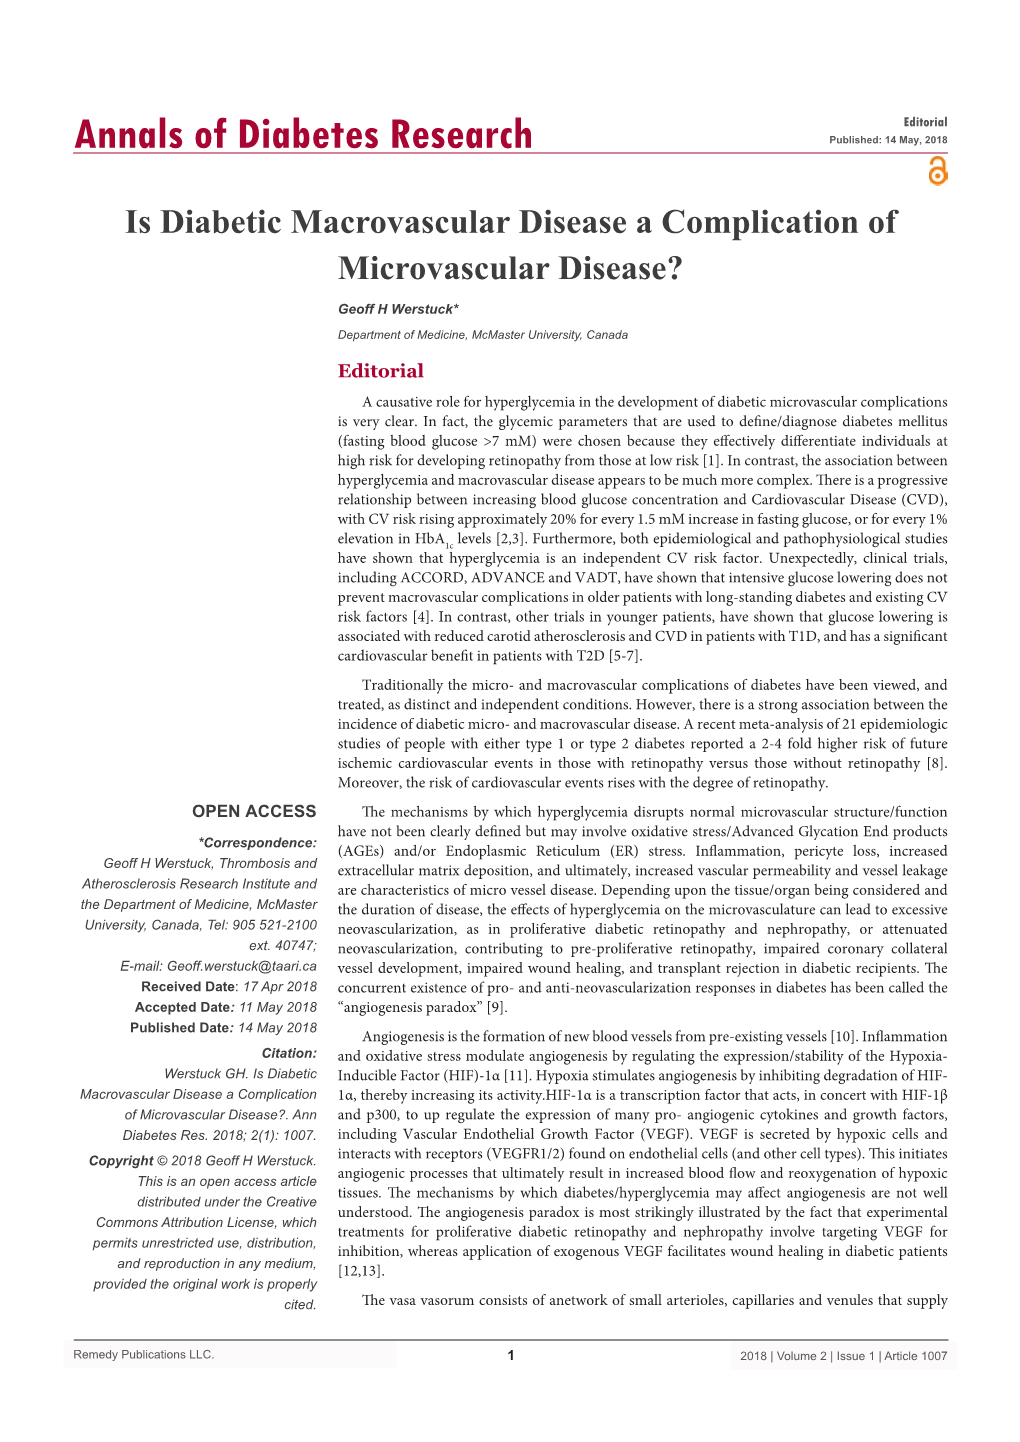 Is Diabetic Macrovascular Disease a Complication of Microvascular Disease?